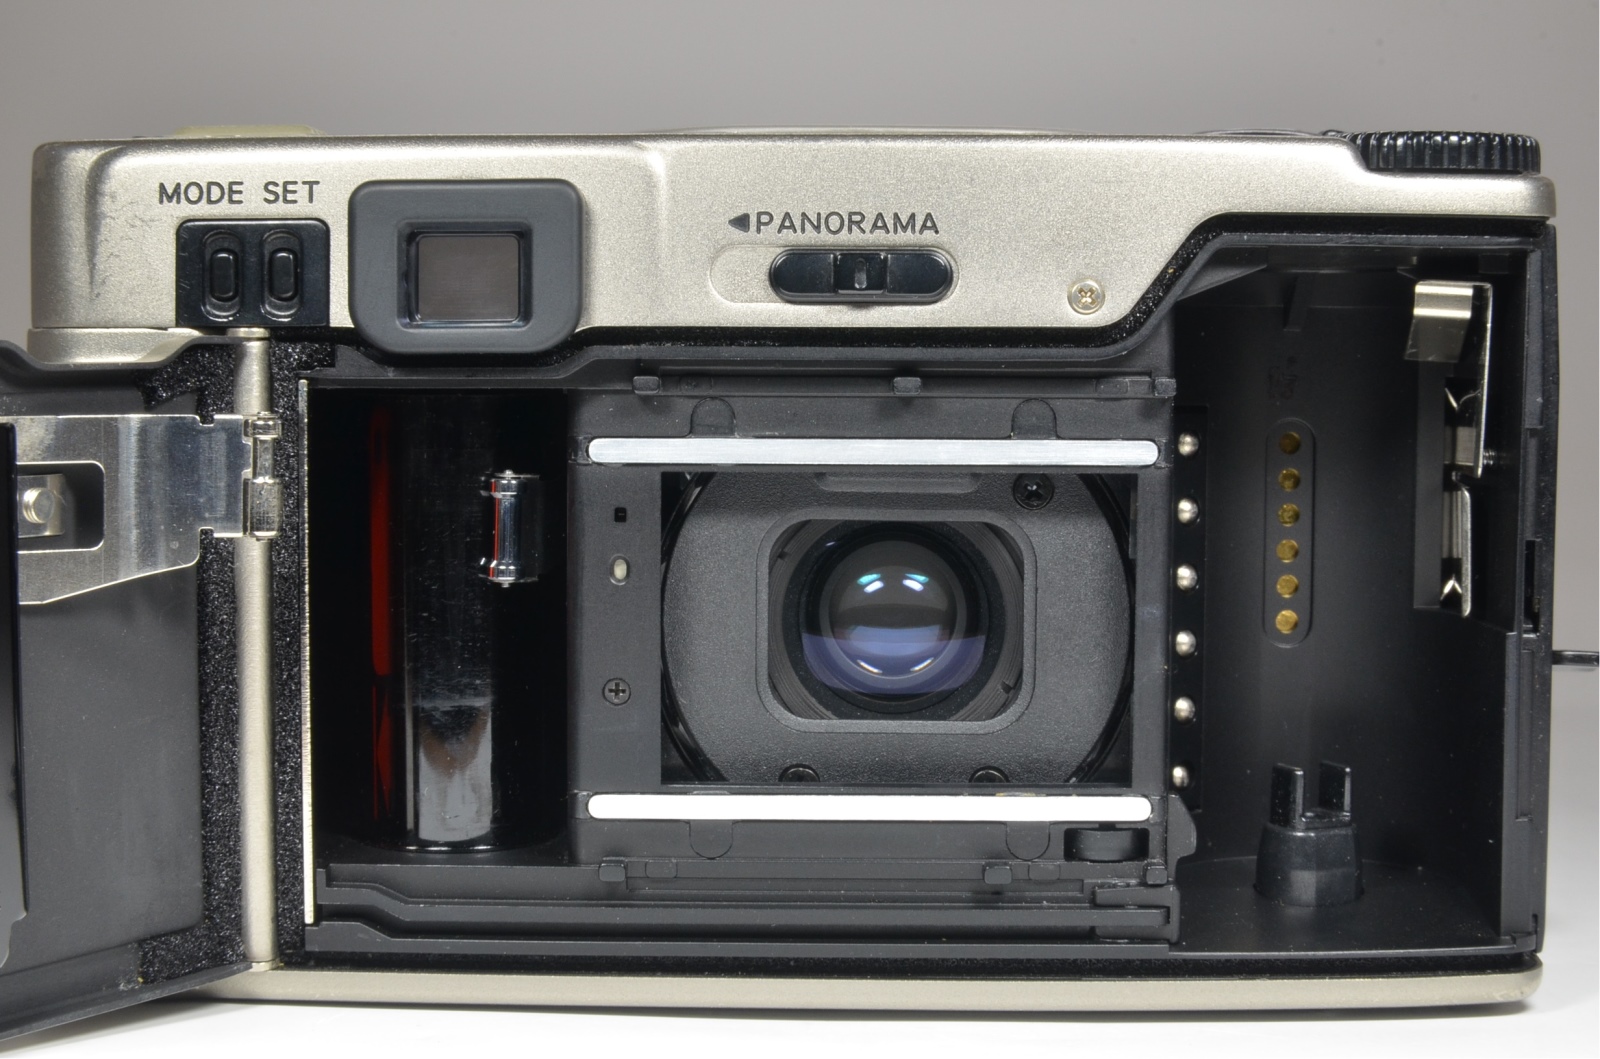 nikon 35ti point & shoot 35mm film camera 35mm f2.8 from japan